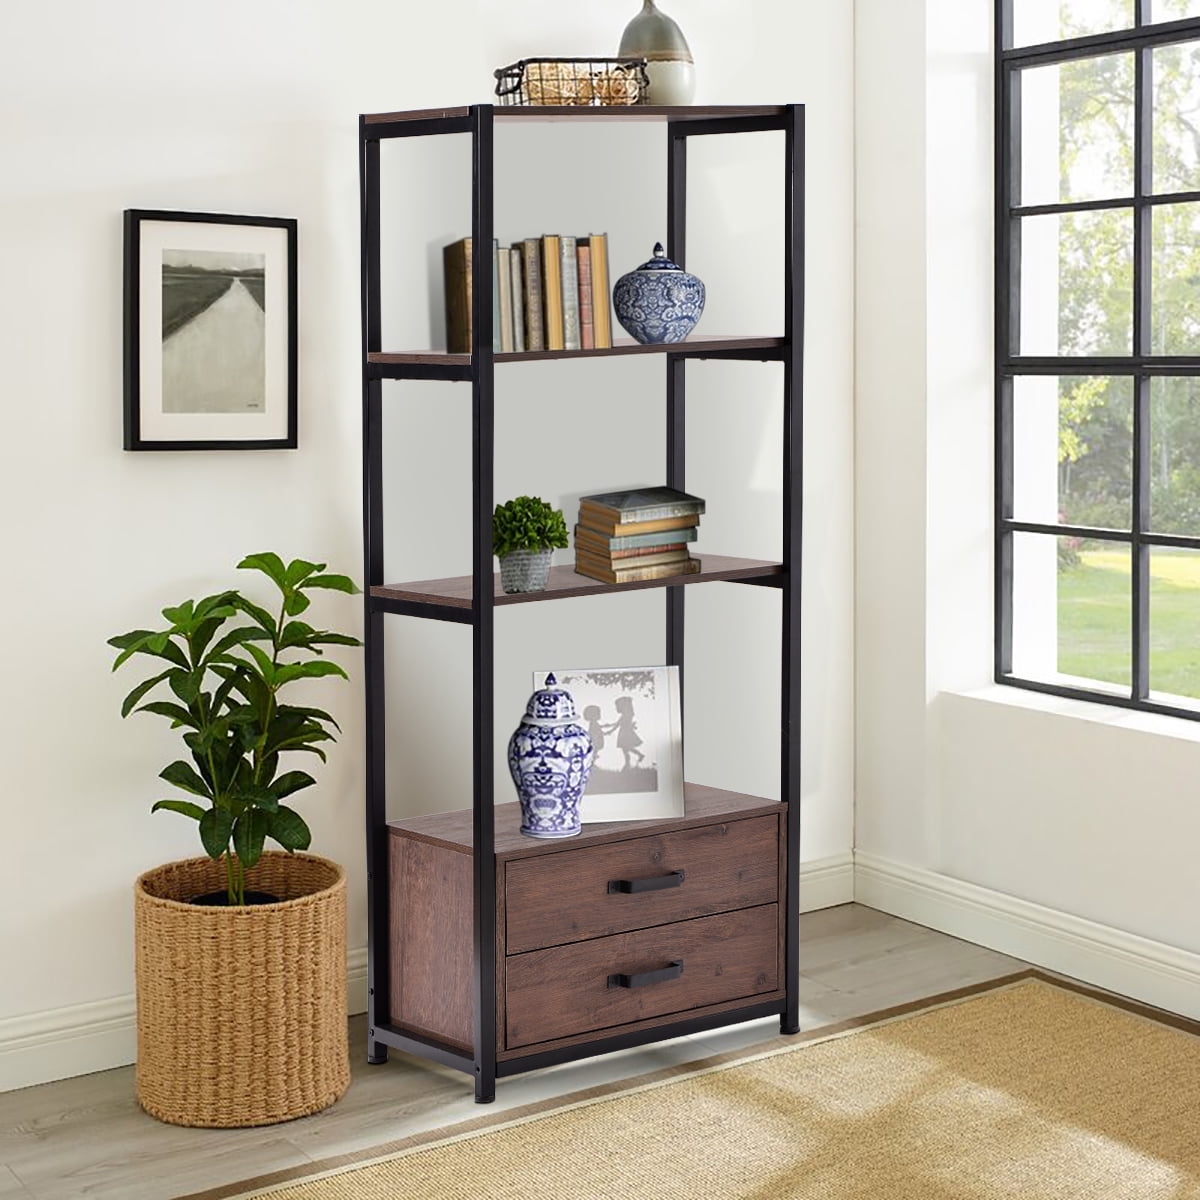 4 Tiers Bookshelf Bookcase Book Shelf Shelves Storage Display Unit Bedroom US 3 